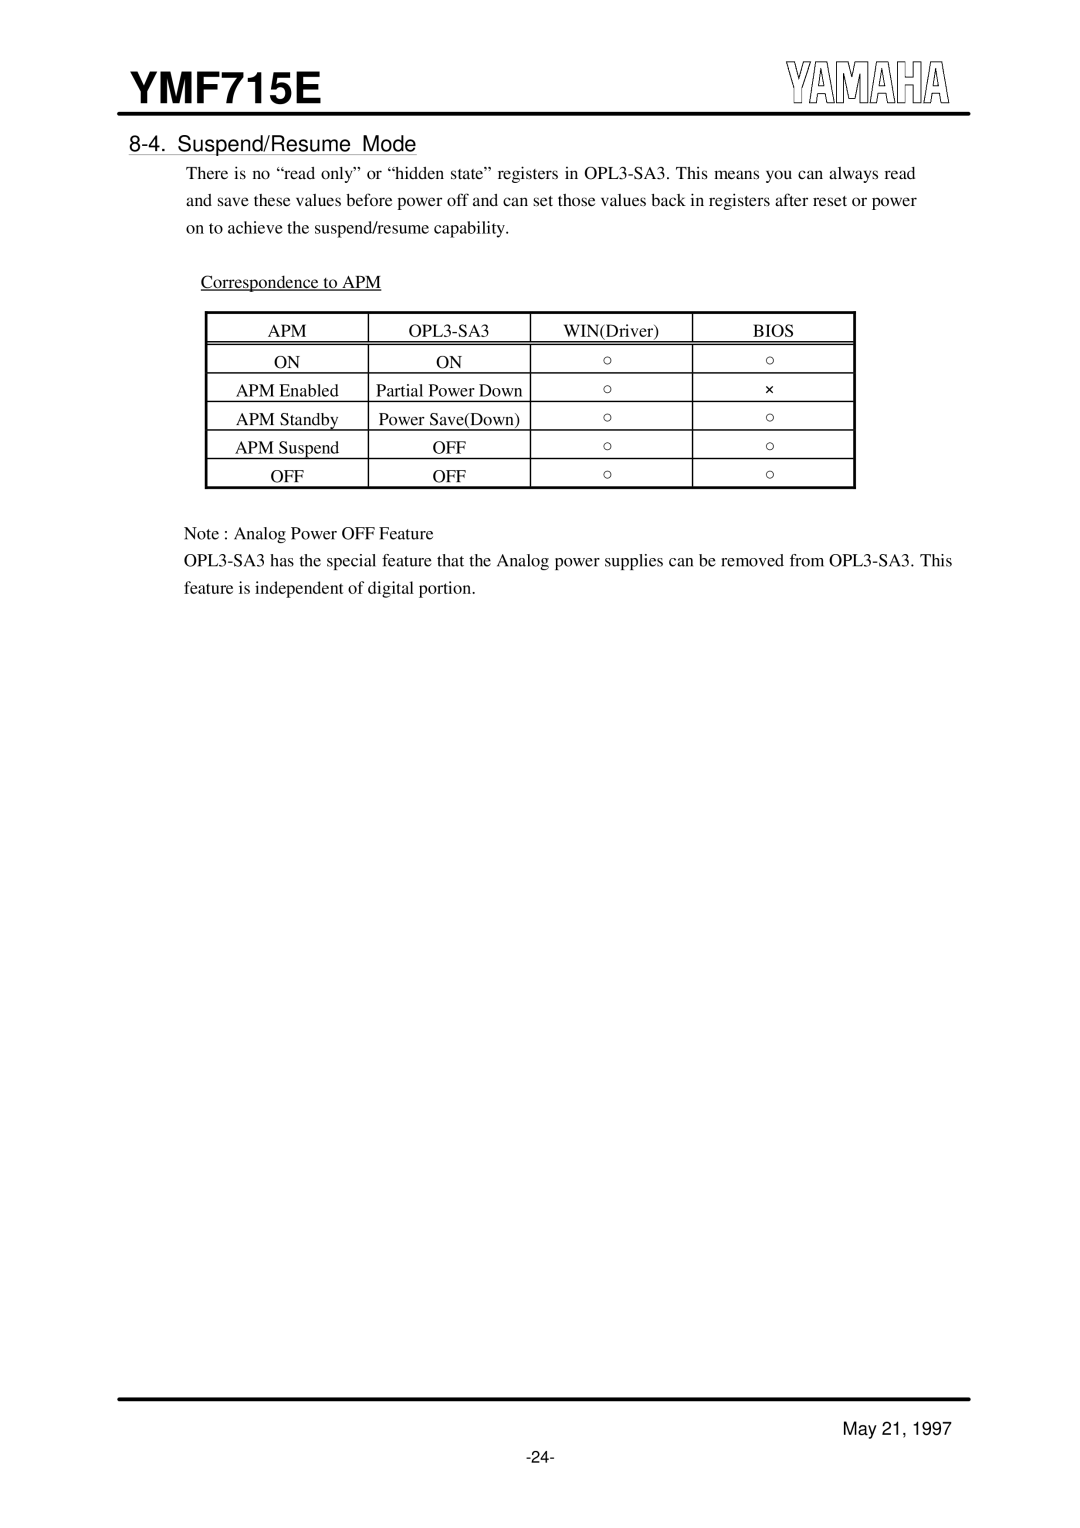 Yamaha OPL3-SA3 specifications Suspend/Resume Mode, YMF715E 